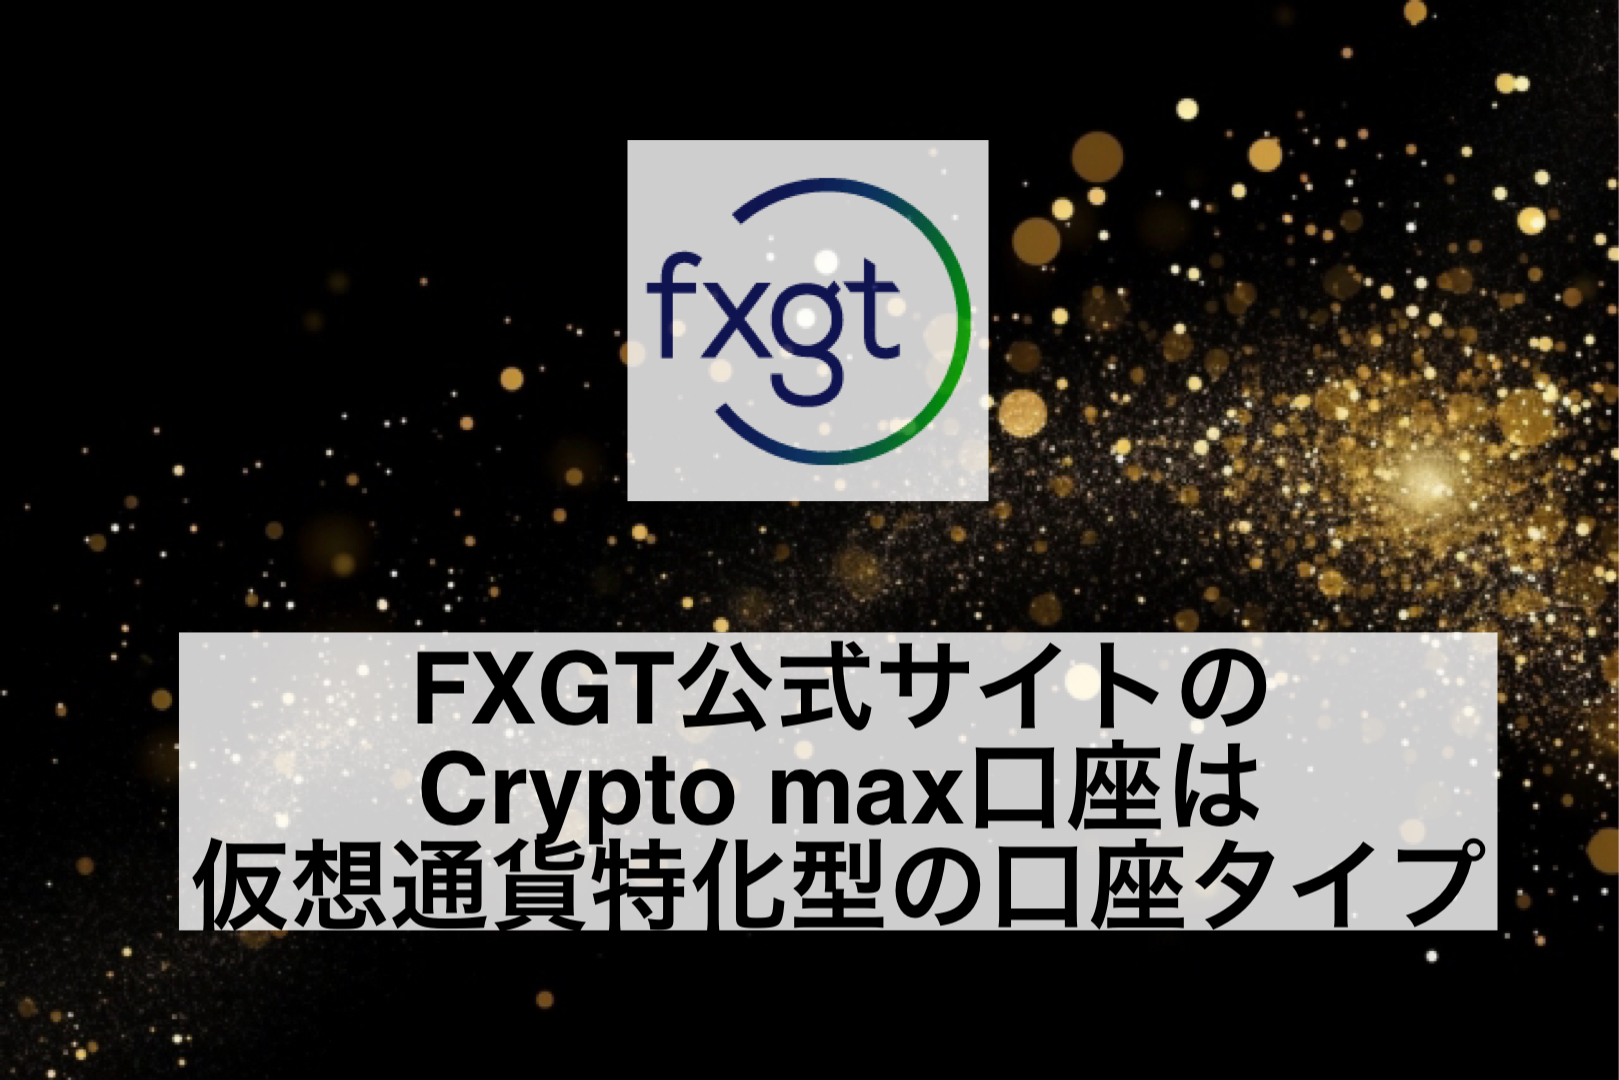 FXGT公式サイトのCrypto max口座は仮想通貨特化型の口座タイプ